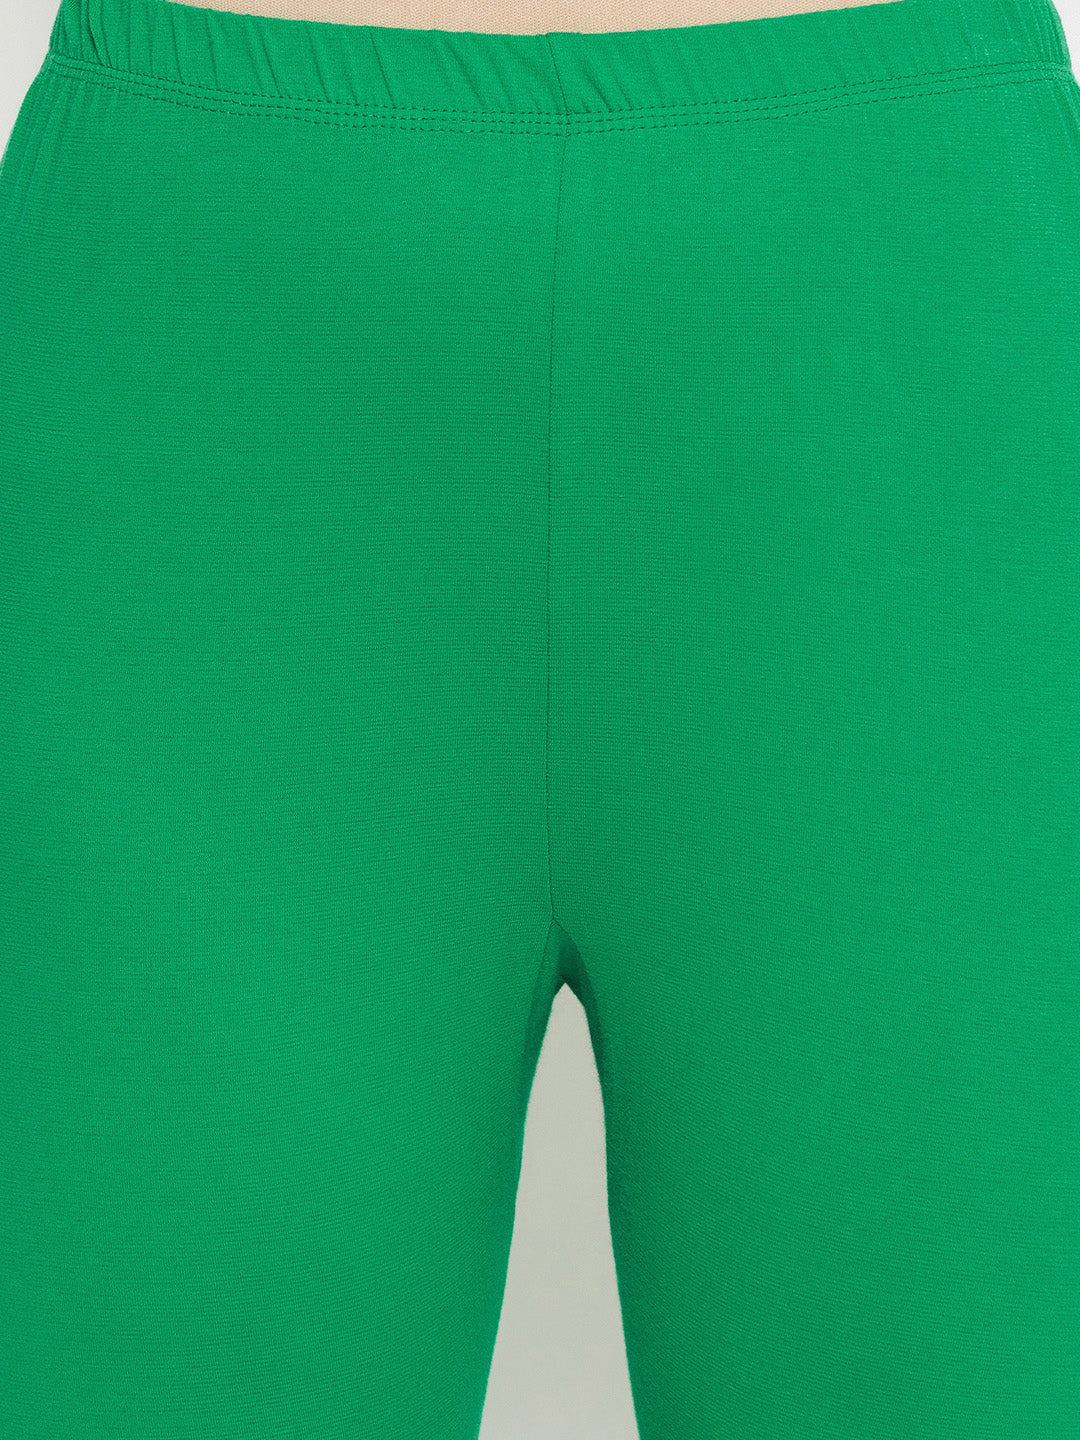 Magenta and Green Churidar Legging Combo (Sku- LEGCO12966).